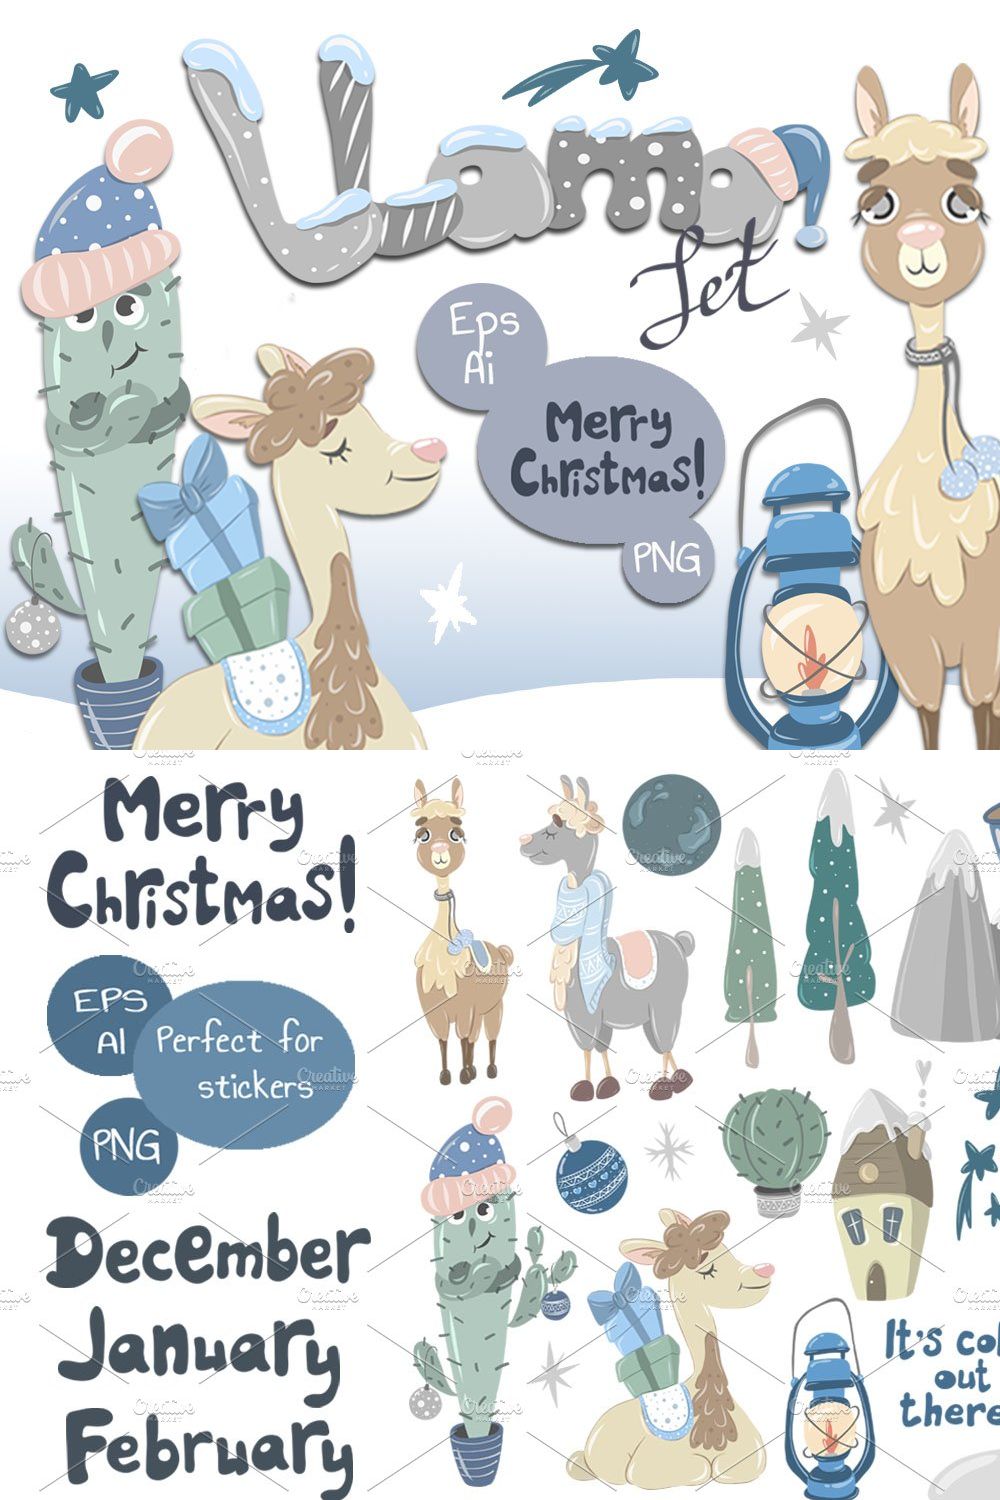 Merry Christmas Llamas vector kit pinterest preview image.